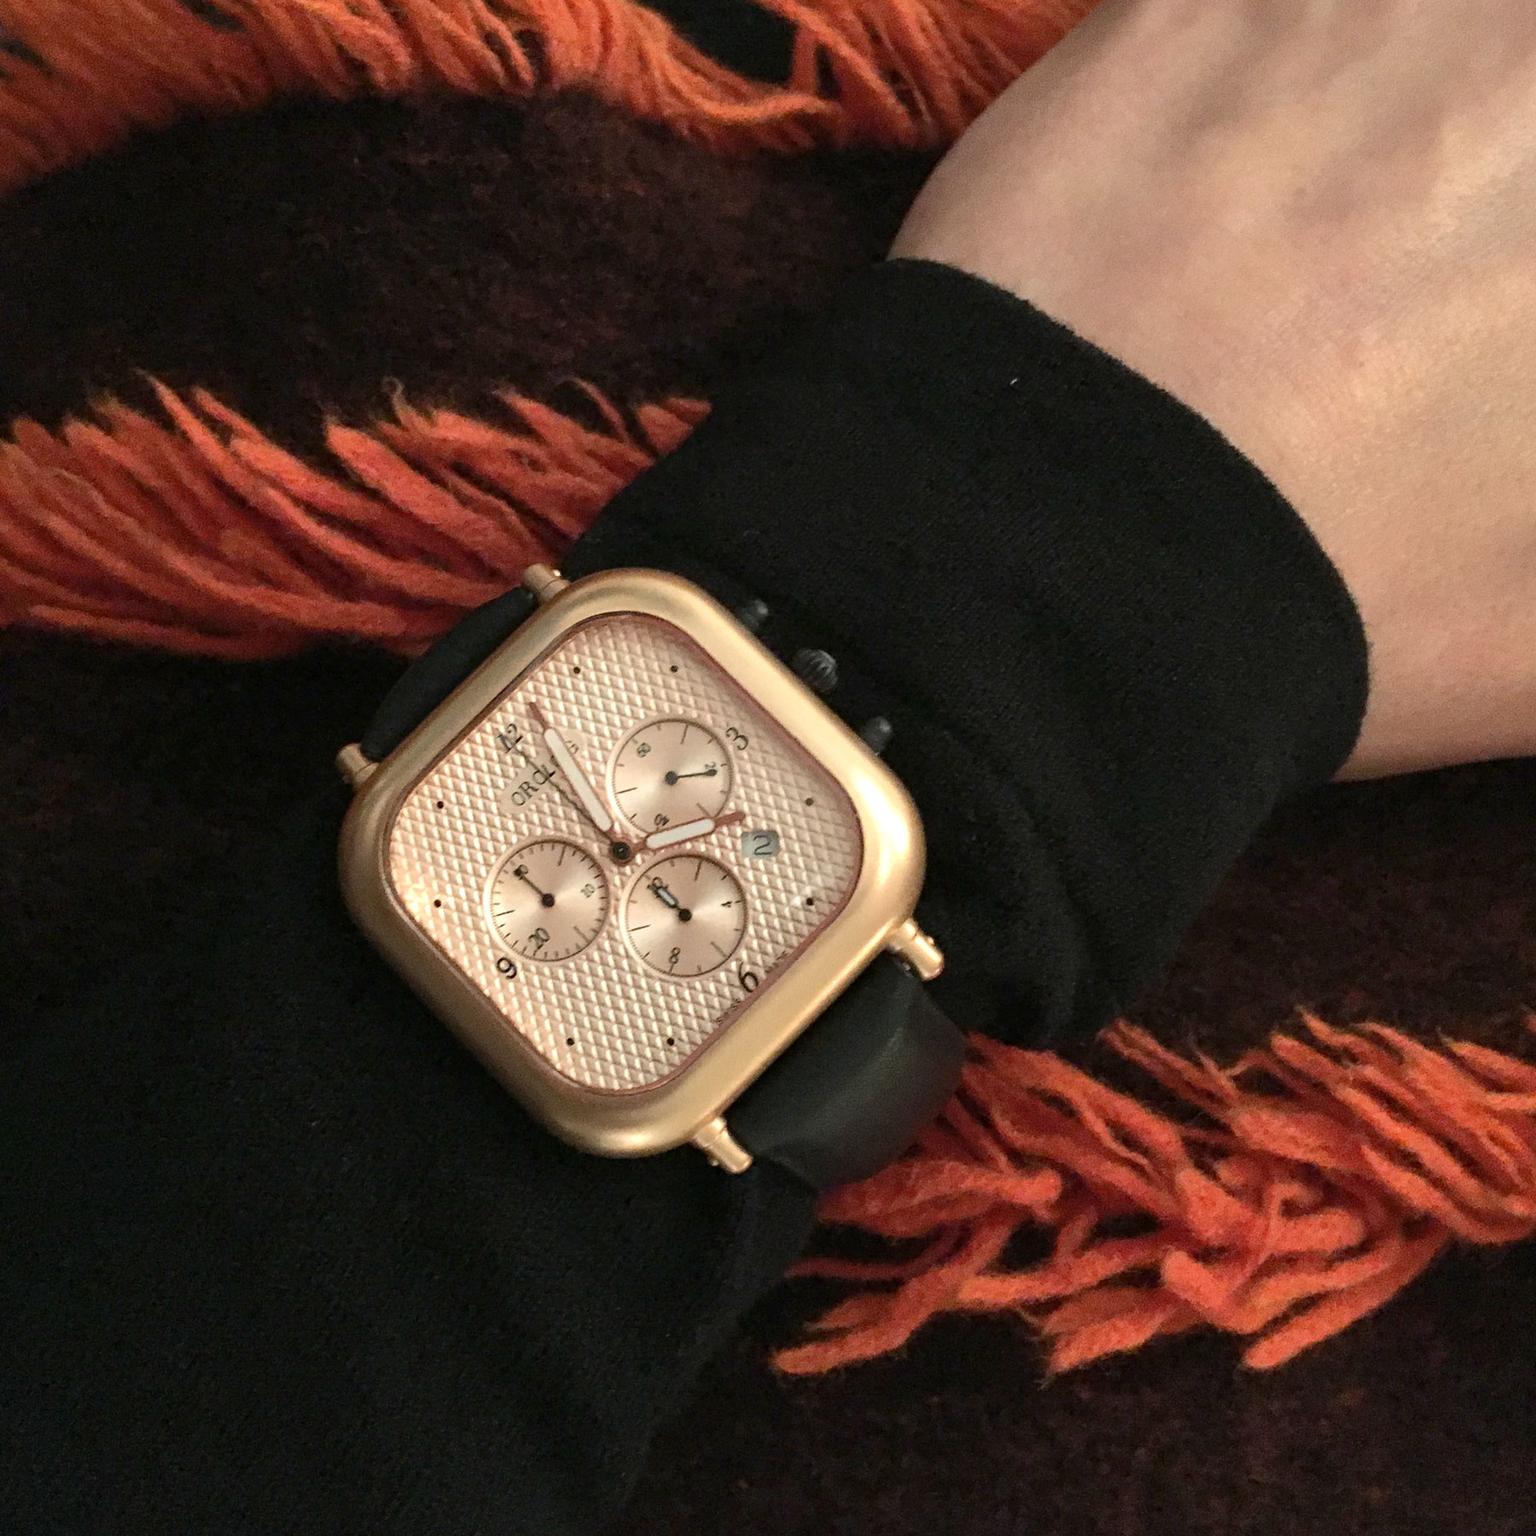 Orolog Chronograph Jaime Hayon watch